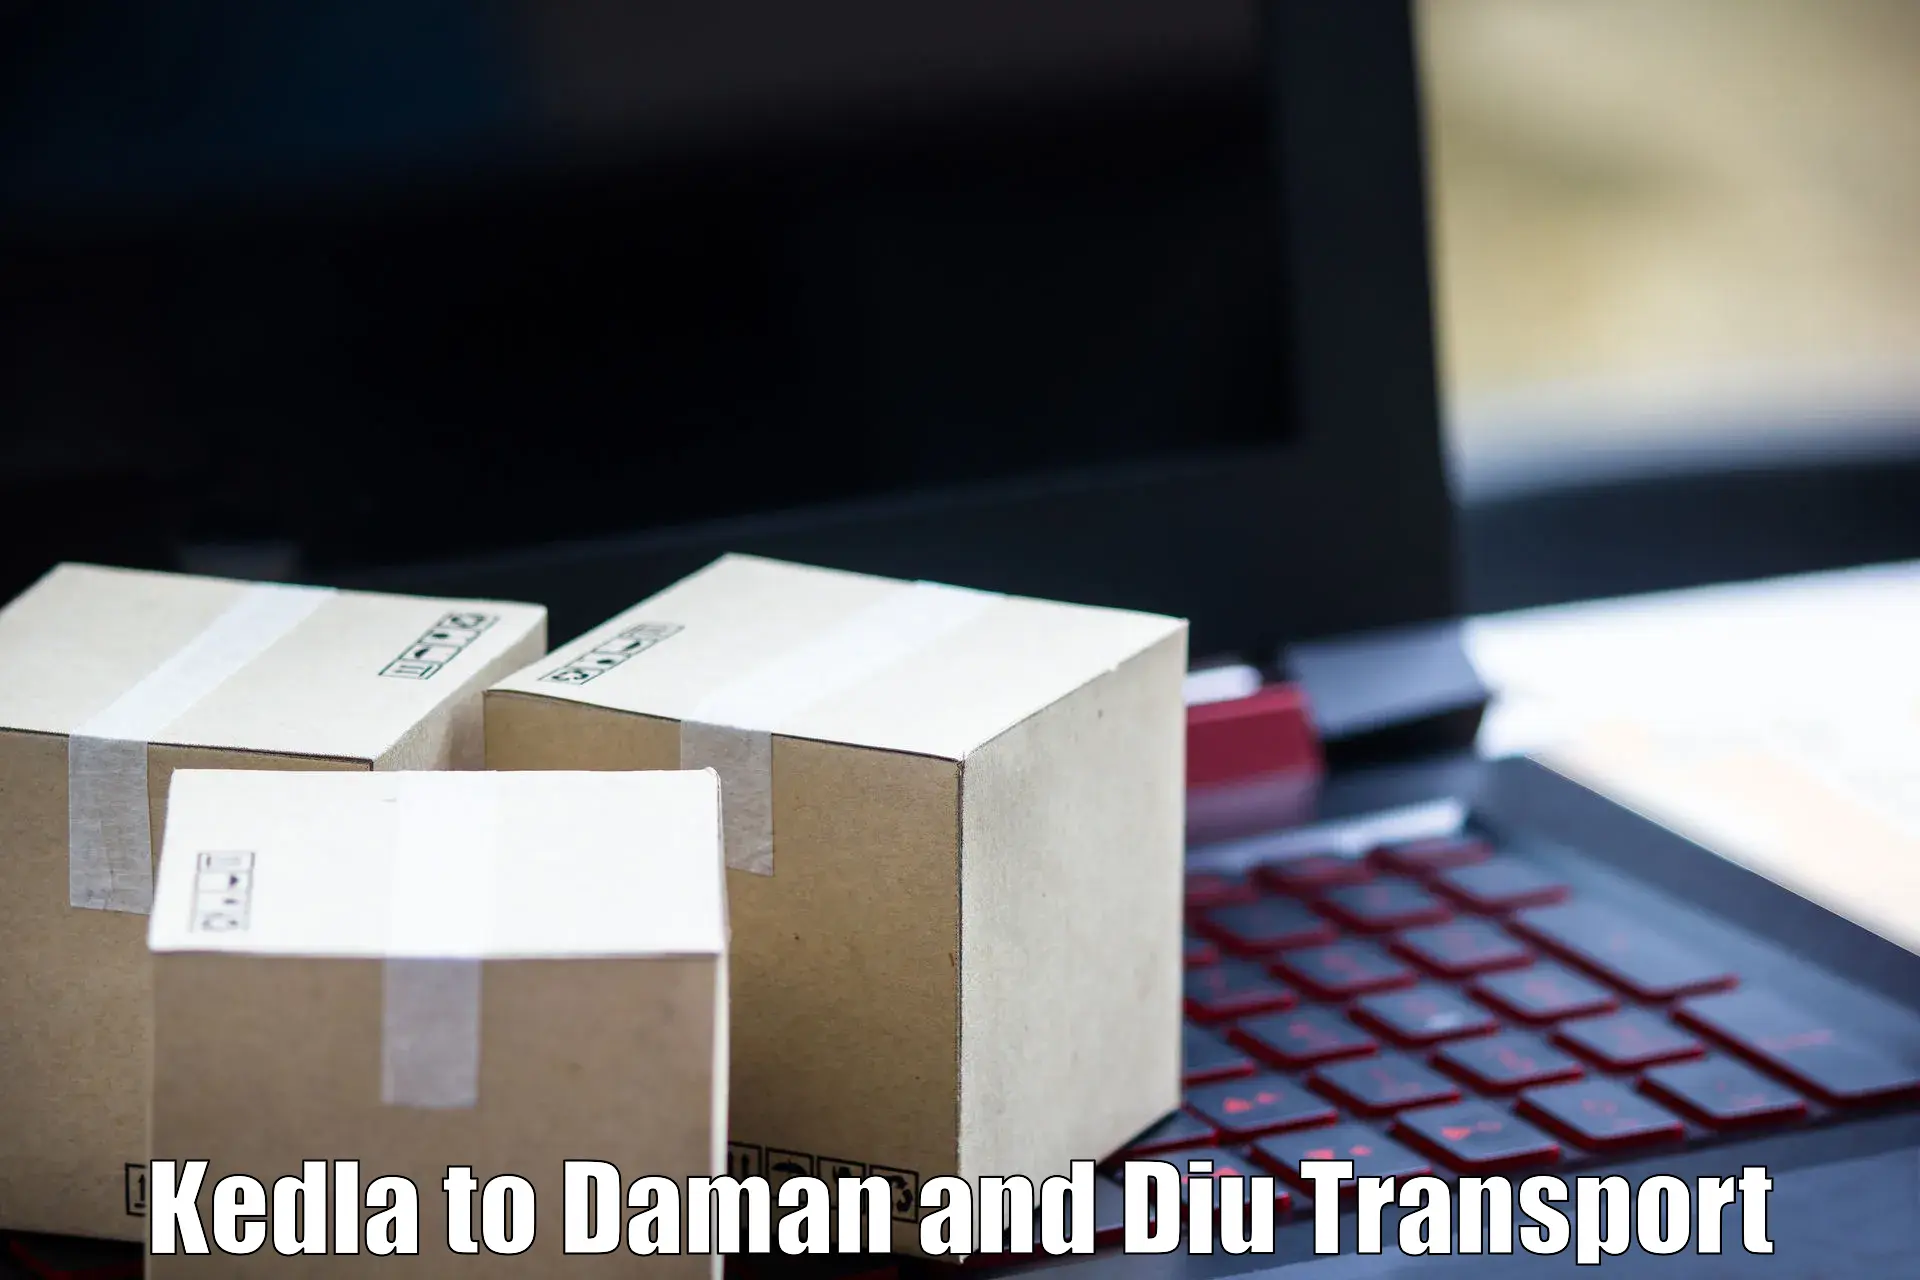 Pick up transport service Kedla to Daman